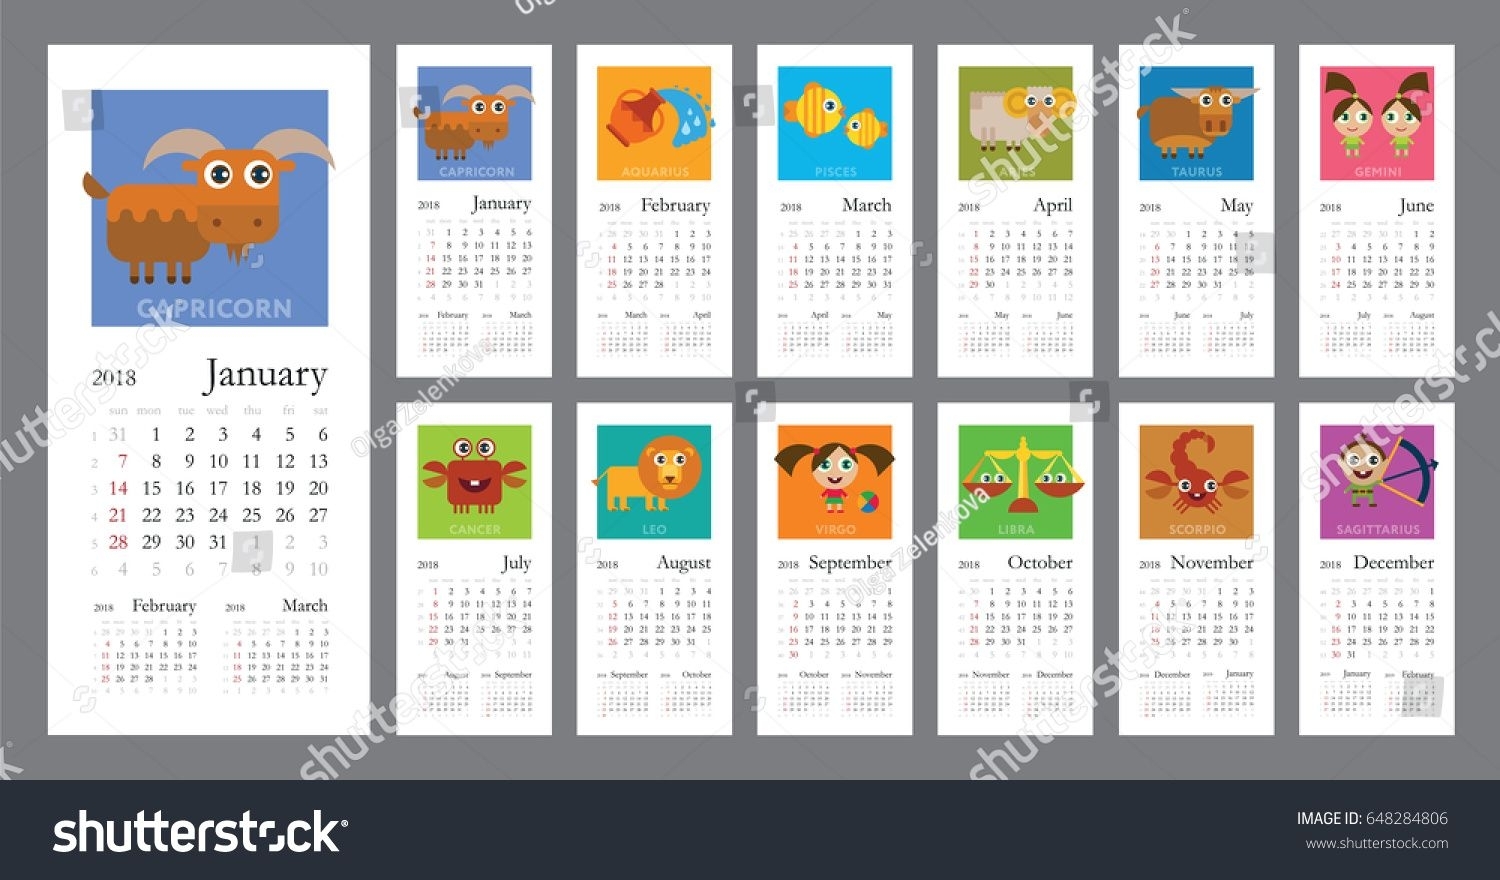 Pincalendar Designer On Calendar Template | Creative